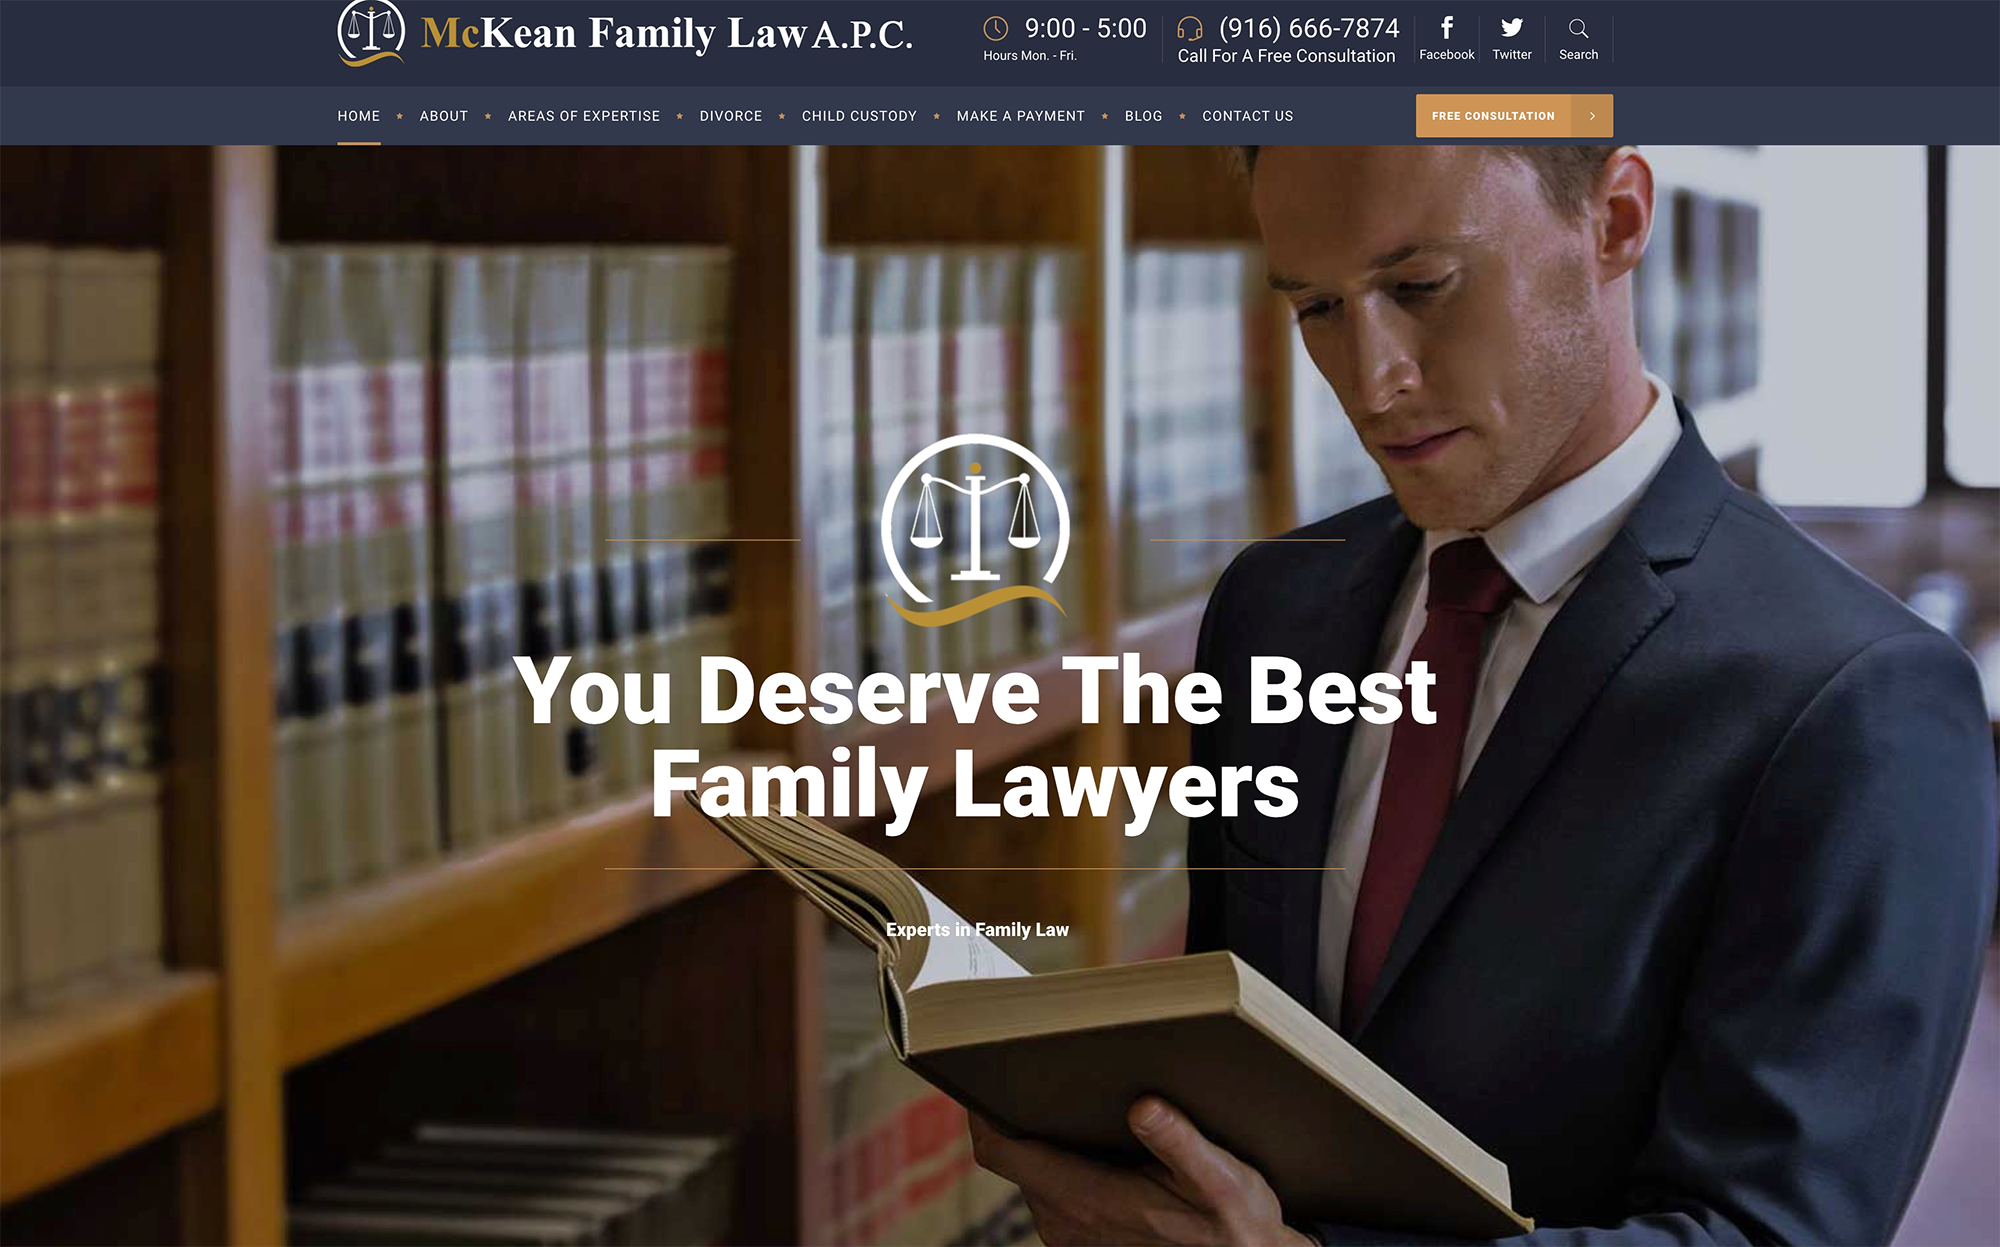 McKean Family Law